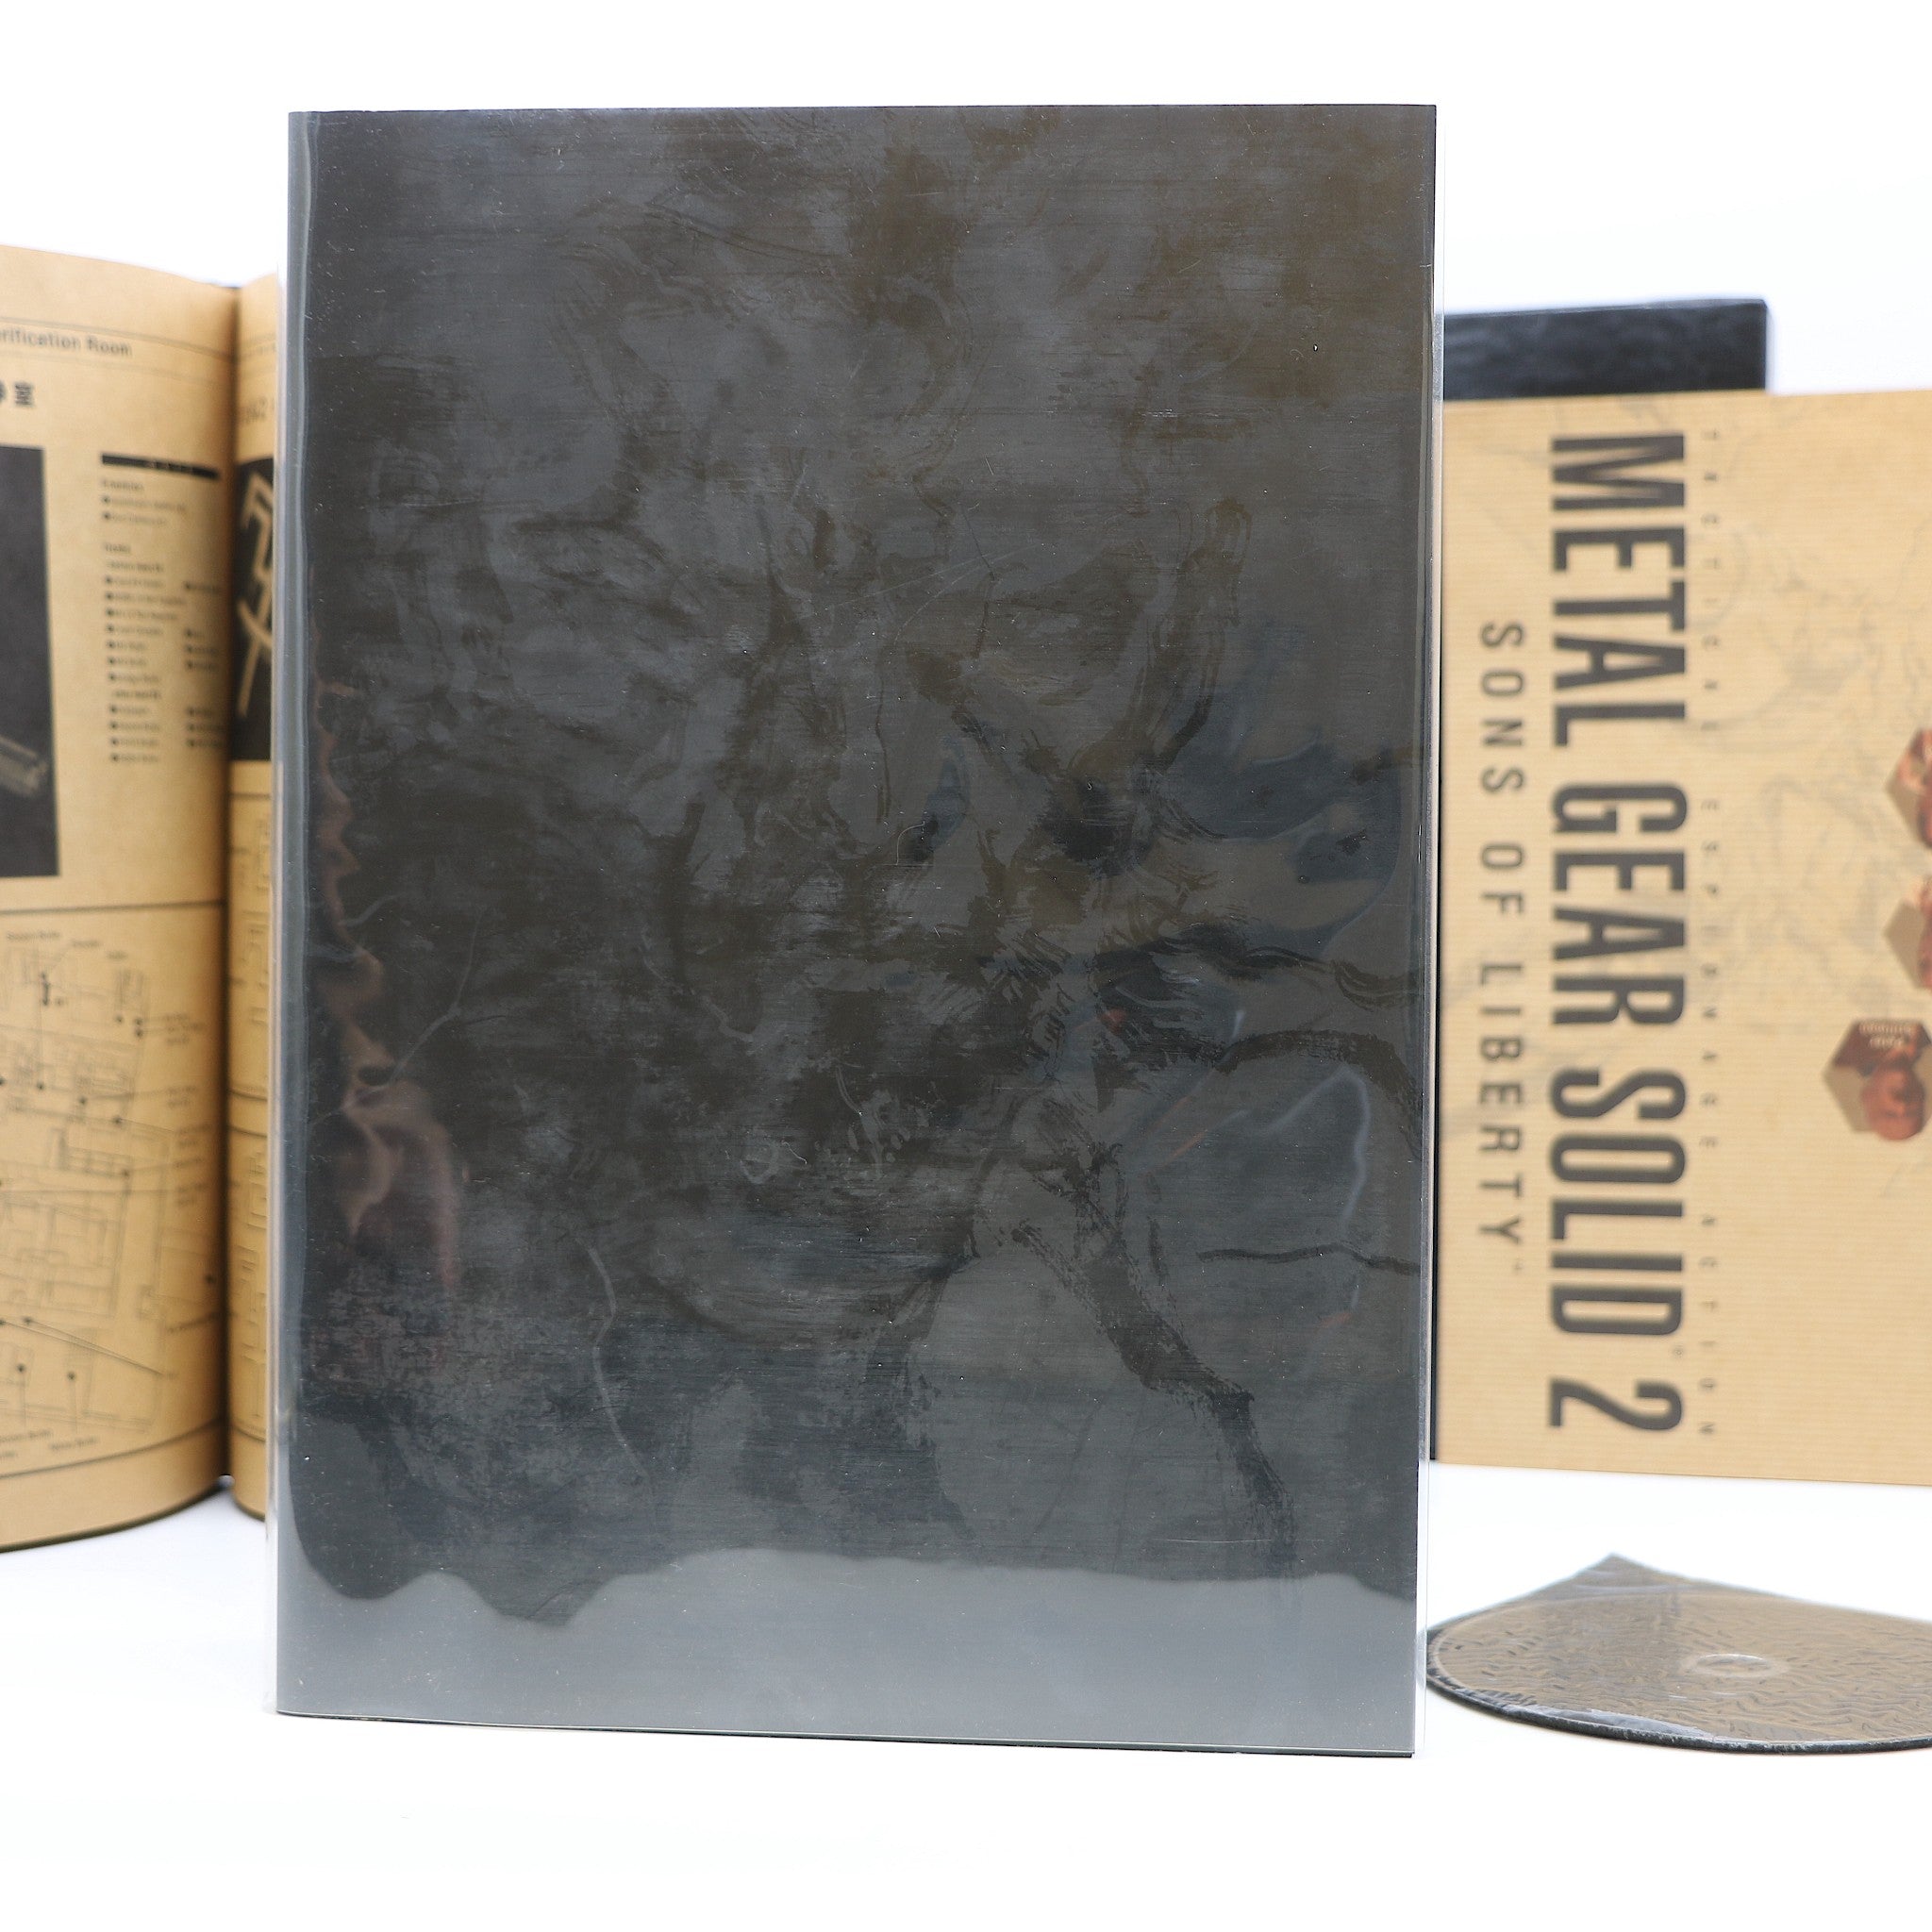 Metal Gear Solid 2 Yoji Shinkawa Konami Style Art Books With Poster & DVD - New!